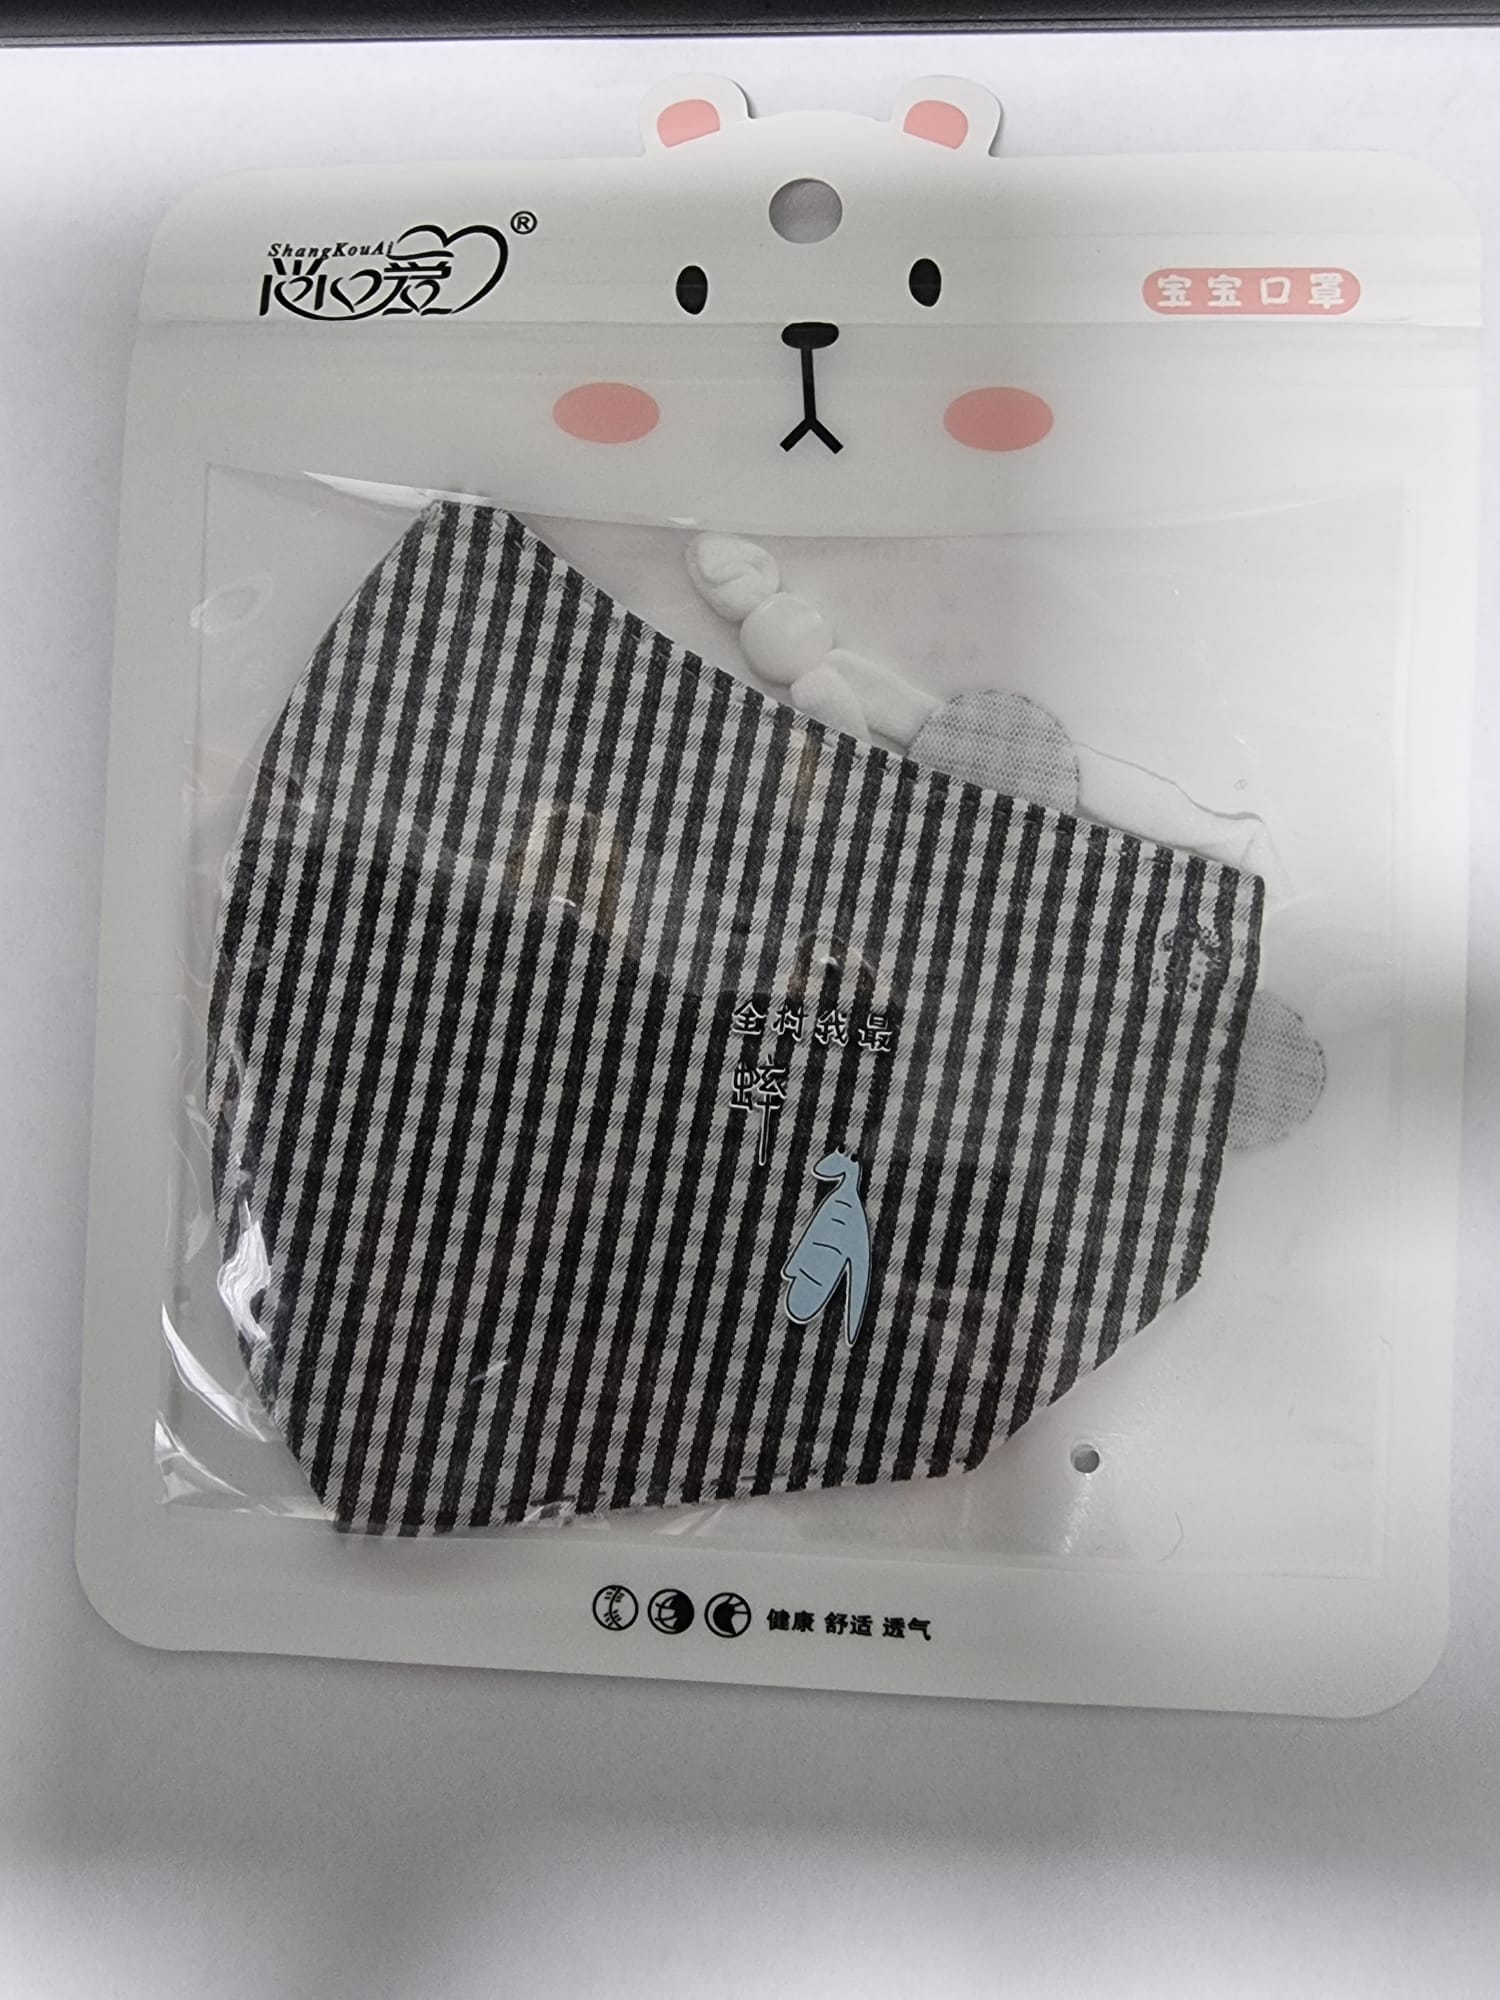 Face Mask - Pure Living Reusable 3 Layers 3D Cotton Face Mask (Washable) Various Design Adult